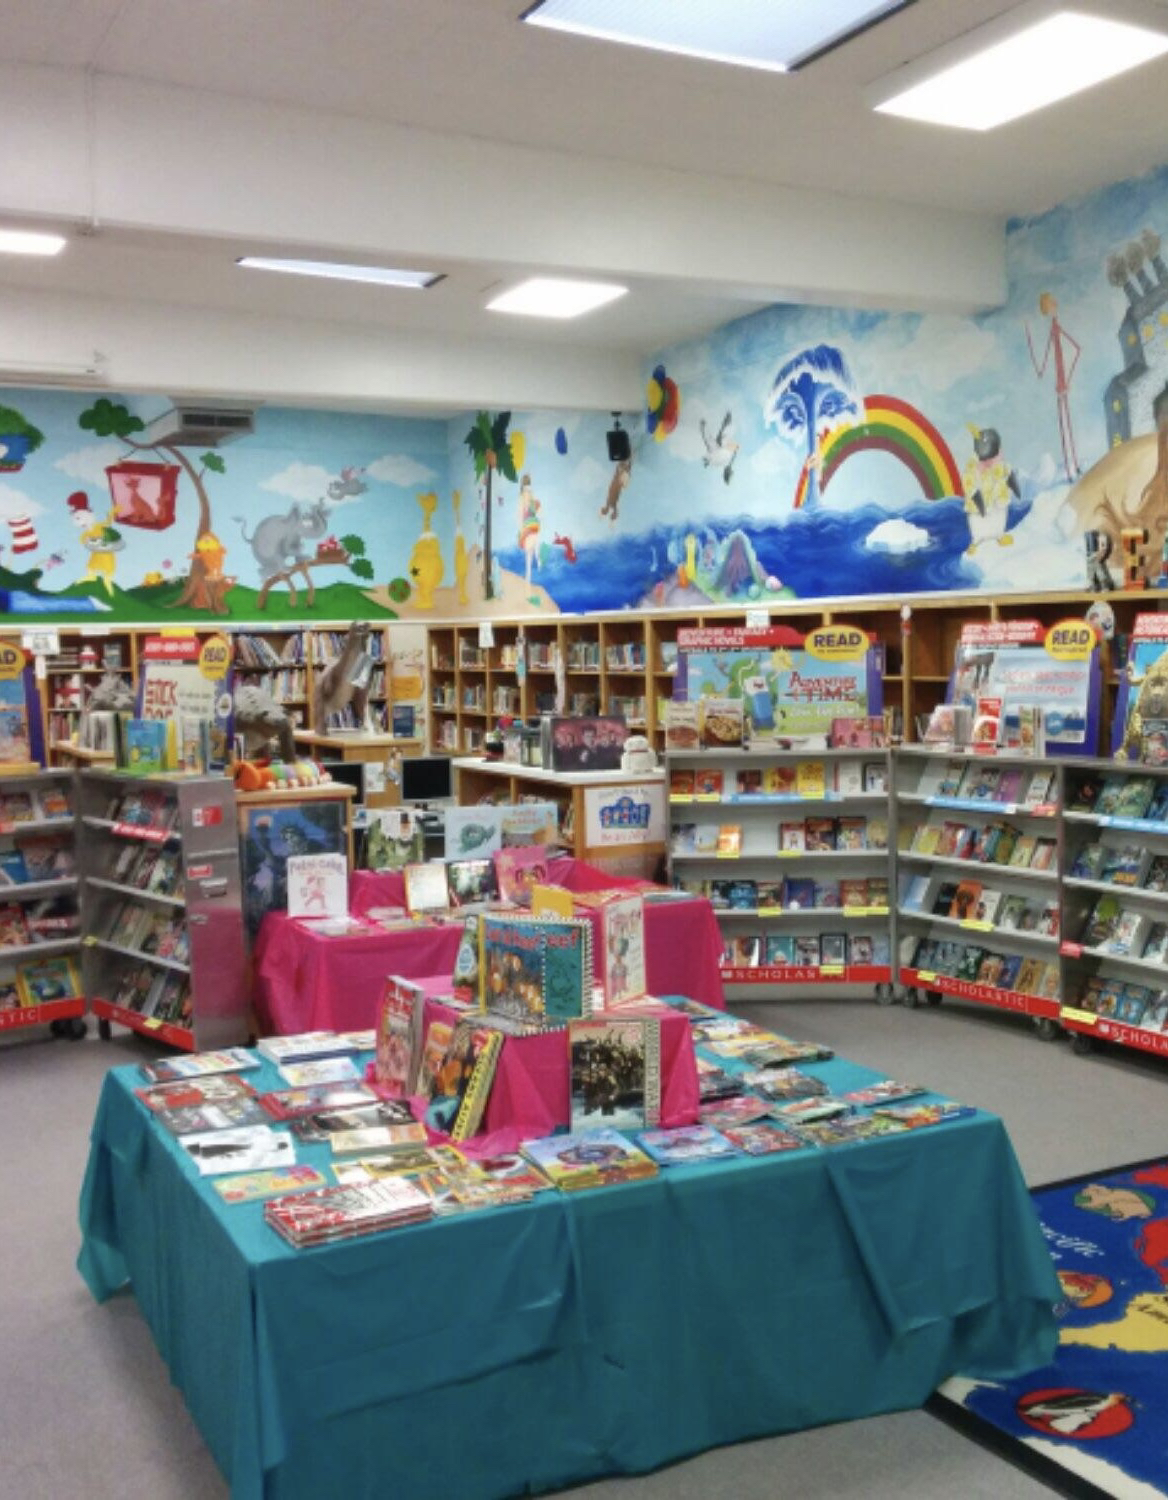 Scholastic Book Fairs help Nevada children grow as readers